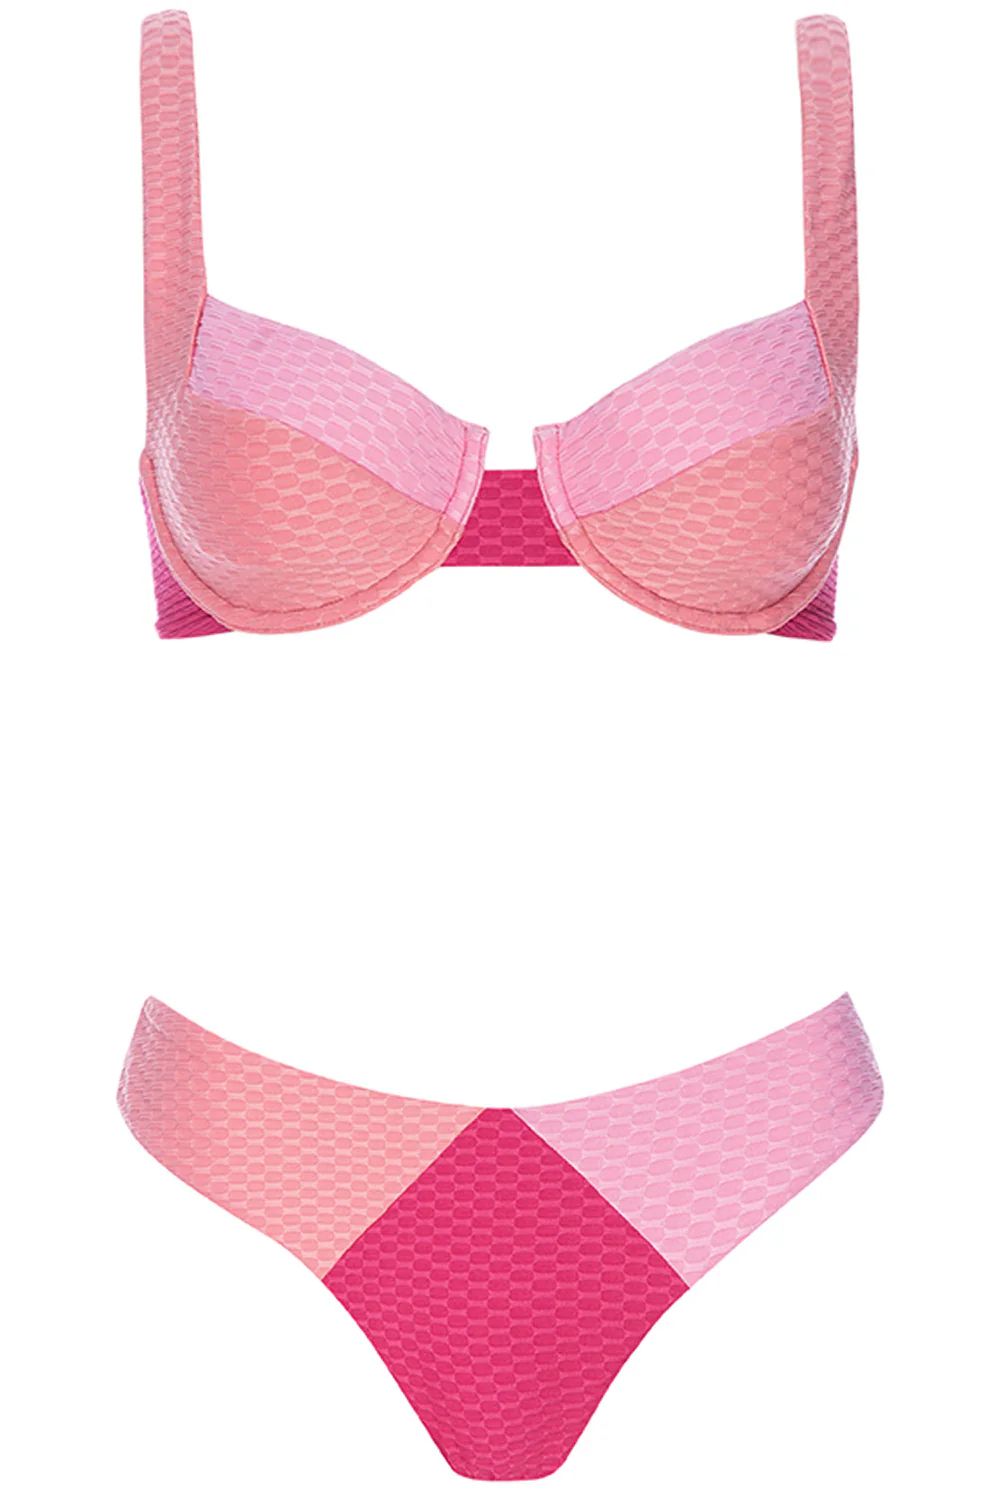 Laguna Bikini Pink Tricolor Set | VETCHY